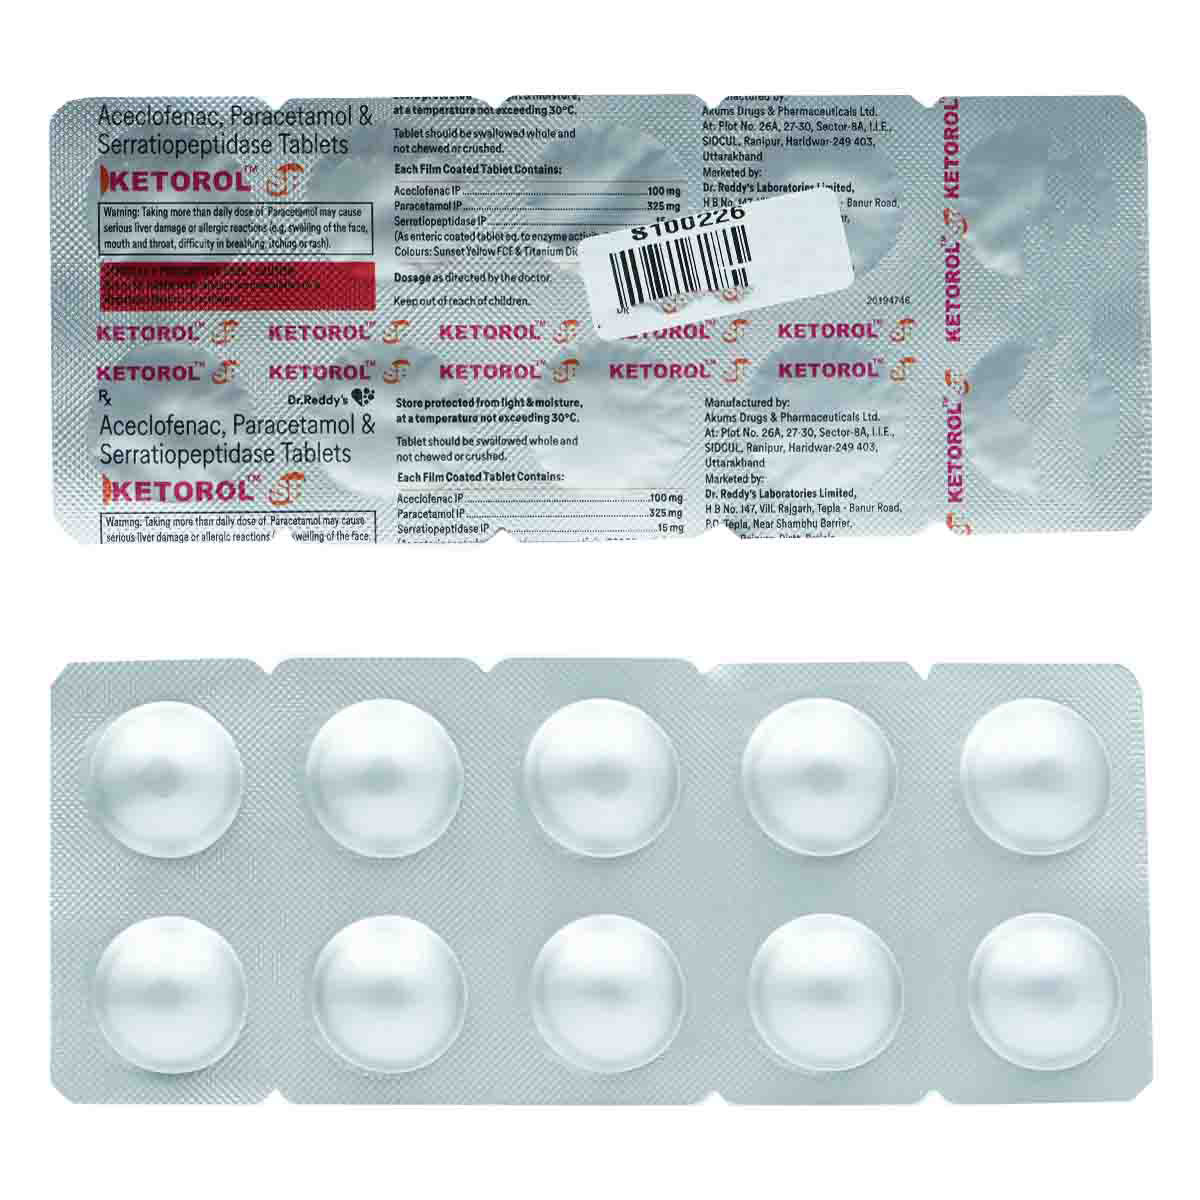 Ketorol SP Tablet 10's Price, Uses, Side Effects, Composition